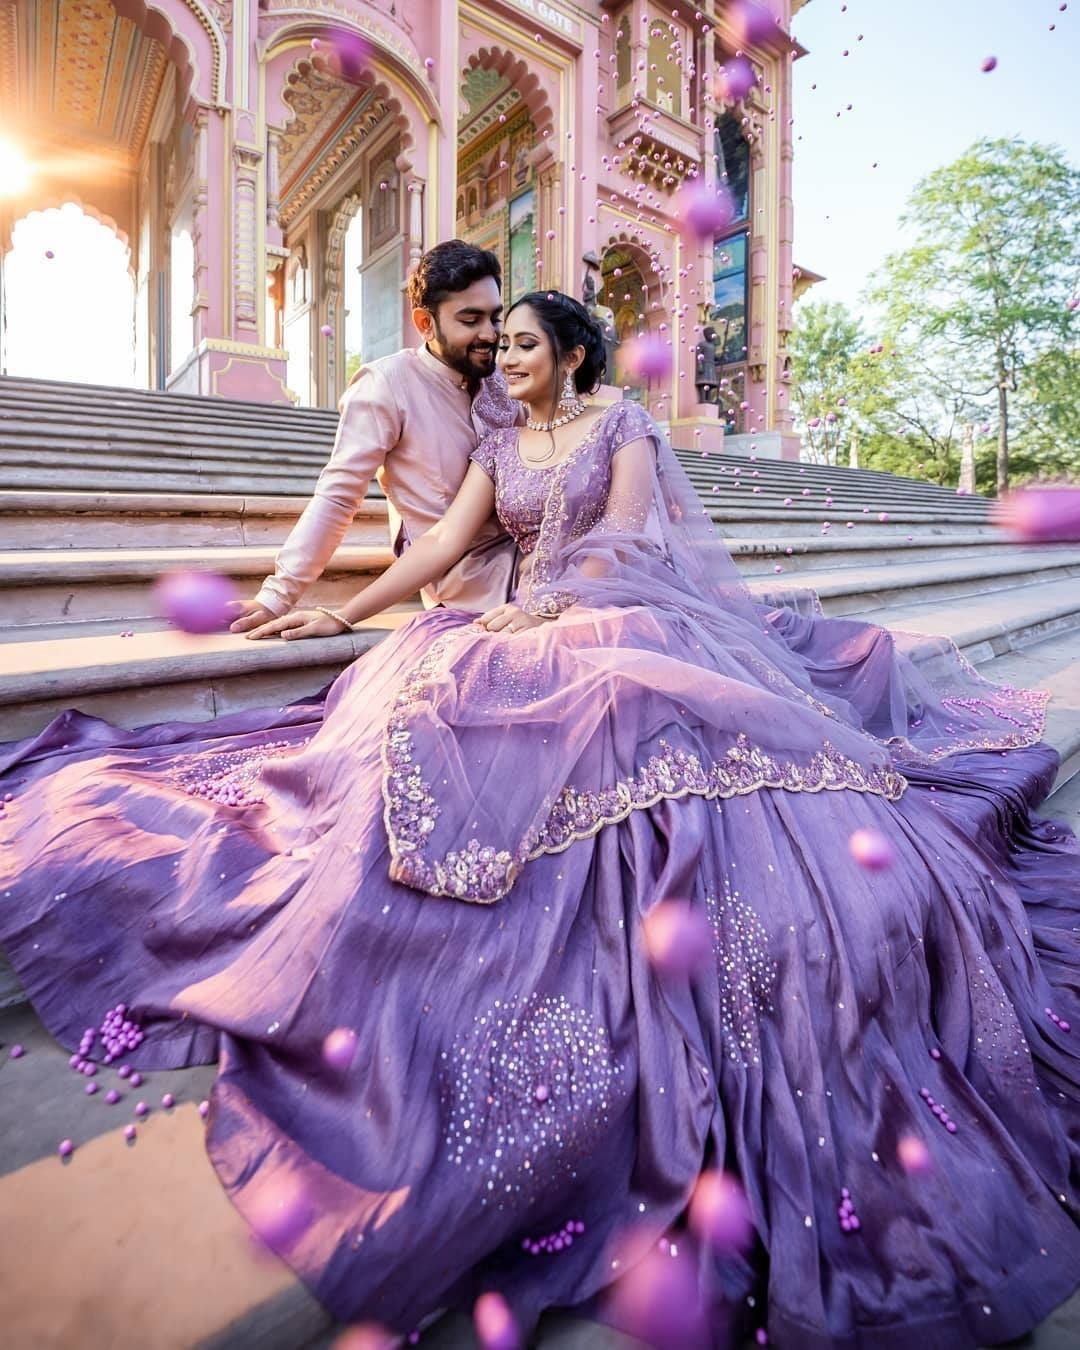 The Most Creative Pre-Wedding Shoots of 2021 - SingaporeBrides